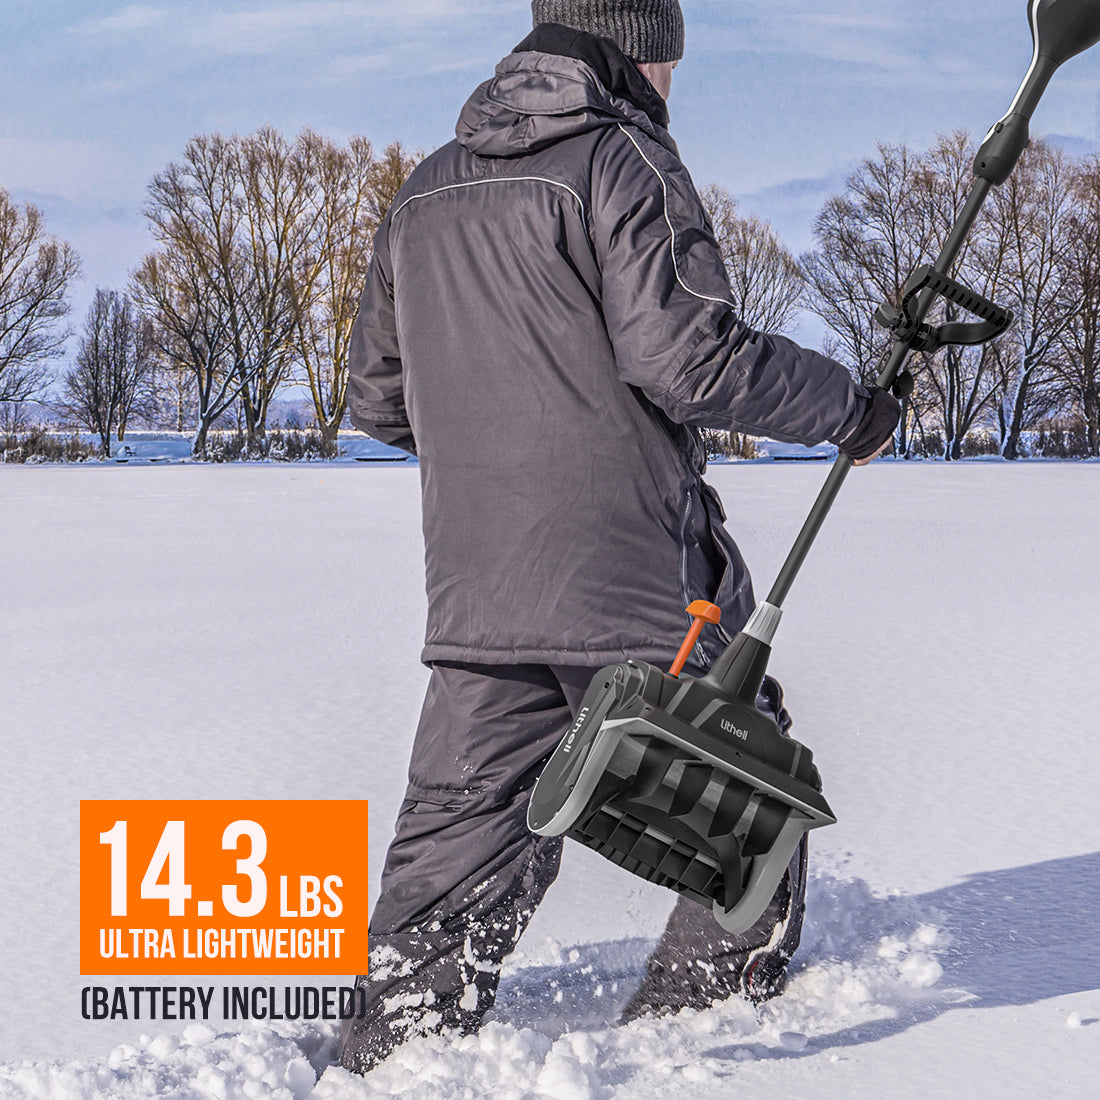 Litheli U20 40 V Brushless Electric Cordless Snow Shovel with Battery